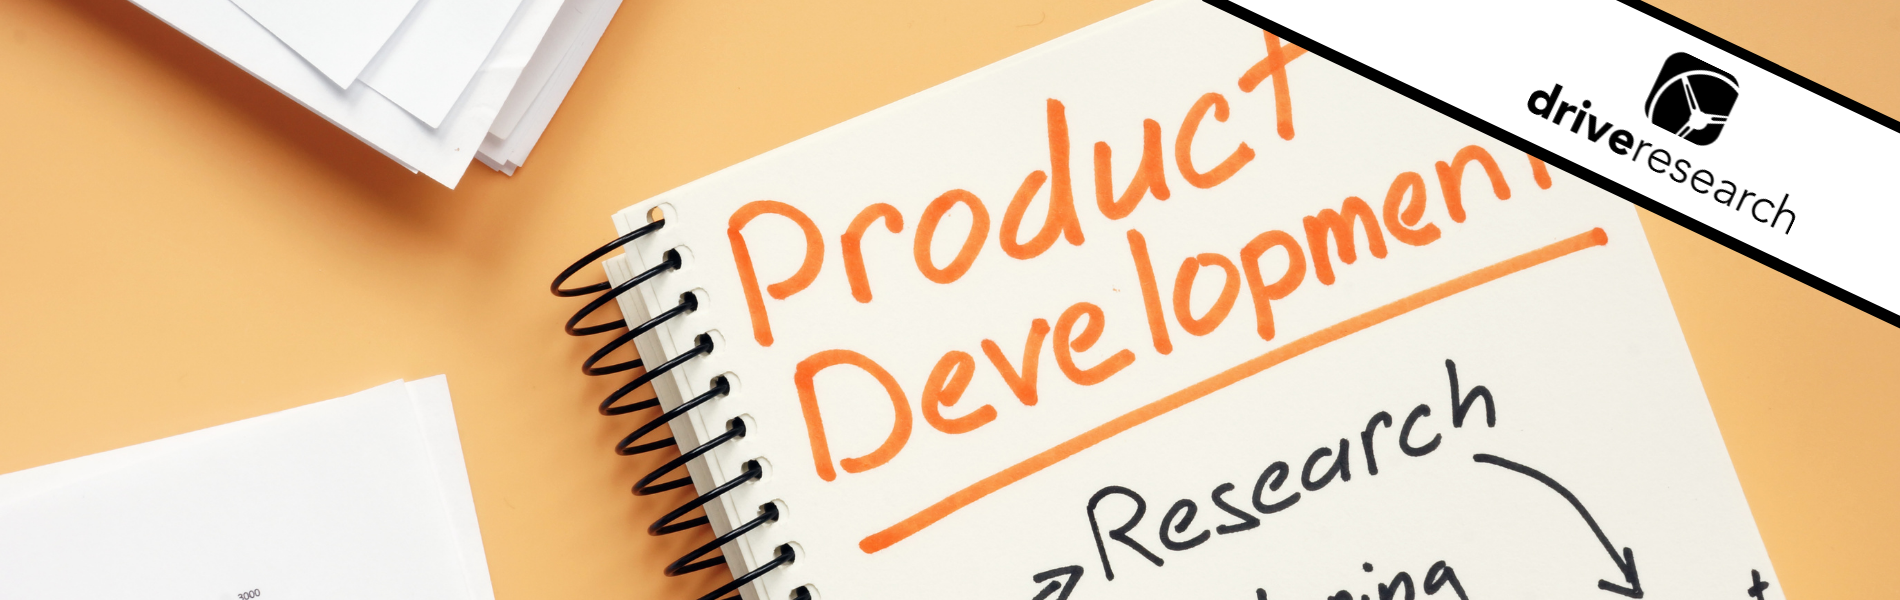 product development research written on a notebook